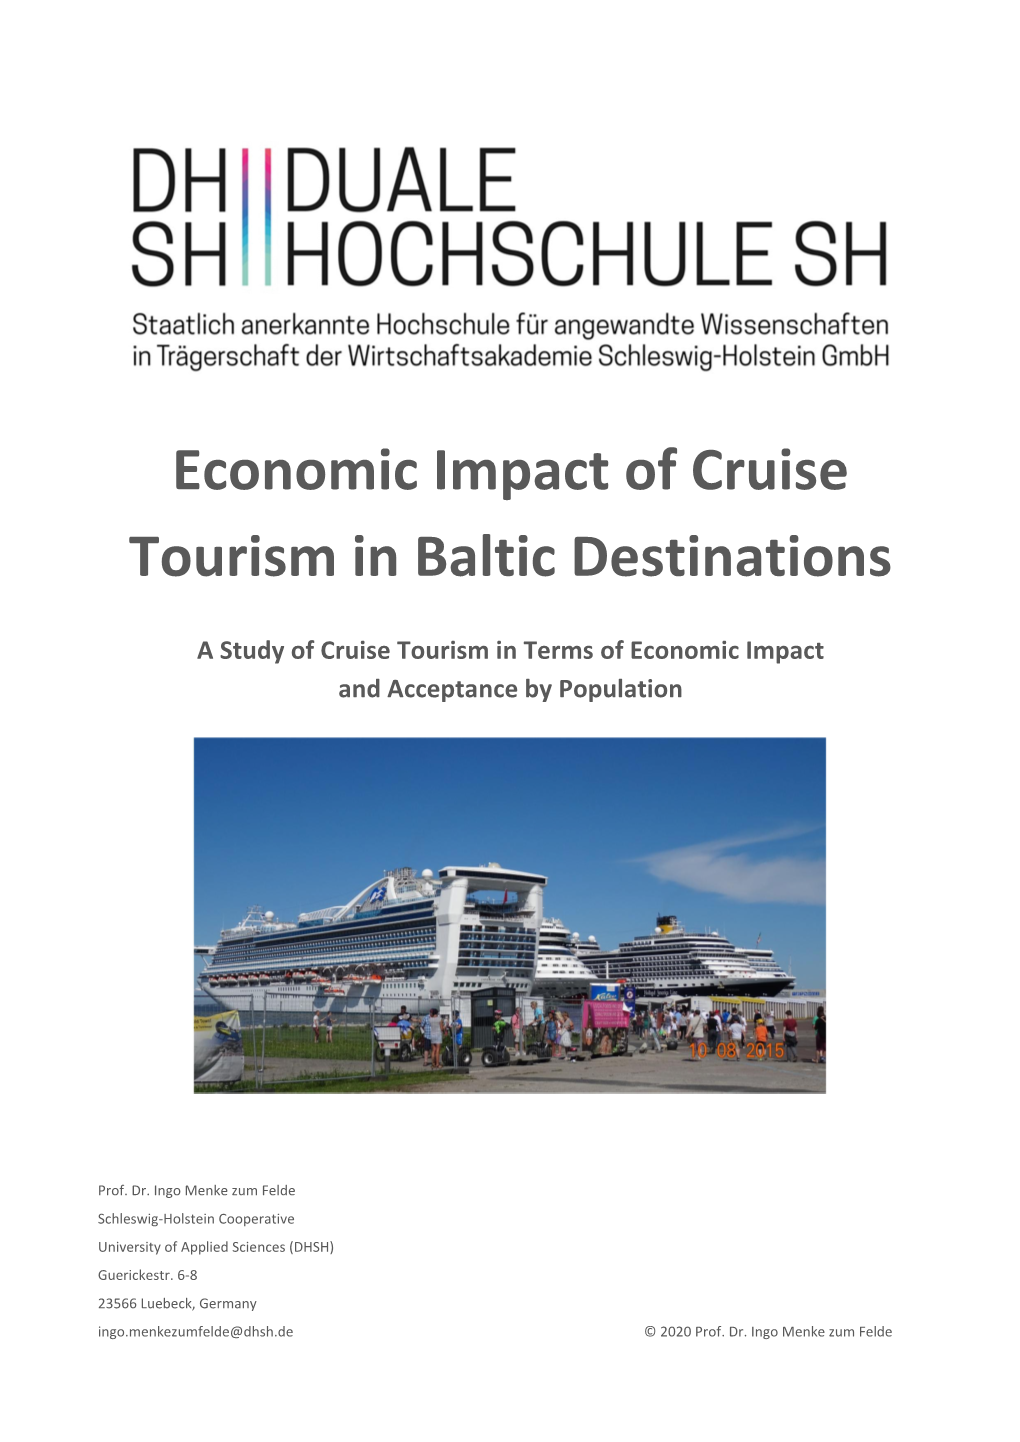 Economic Impact of Cruise Tourism in Baltic Destinations